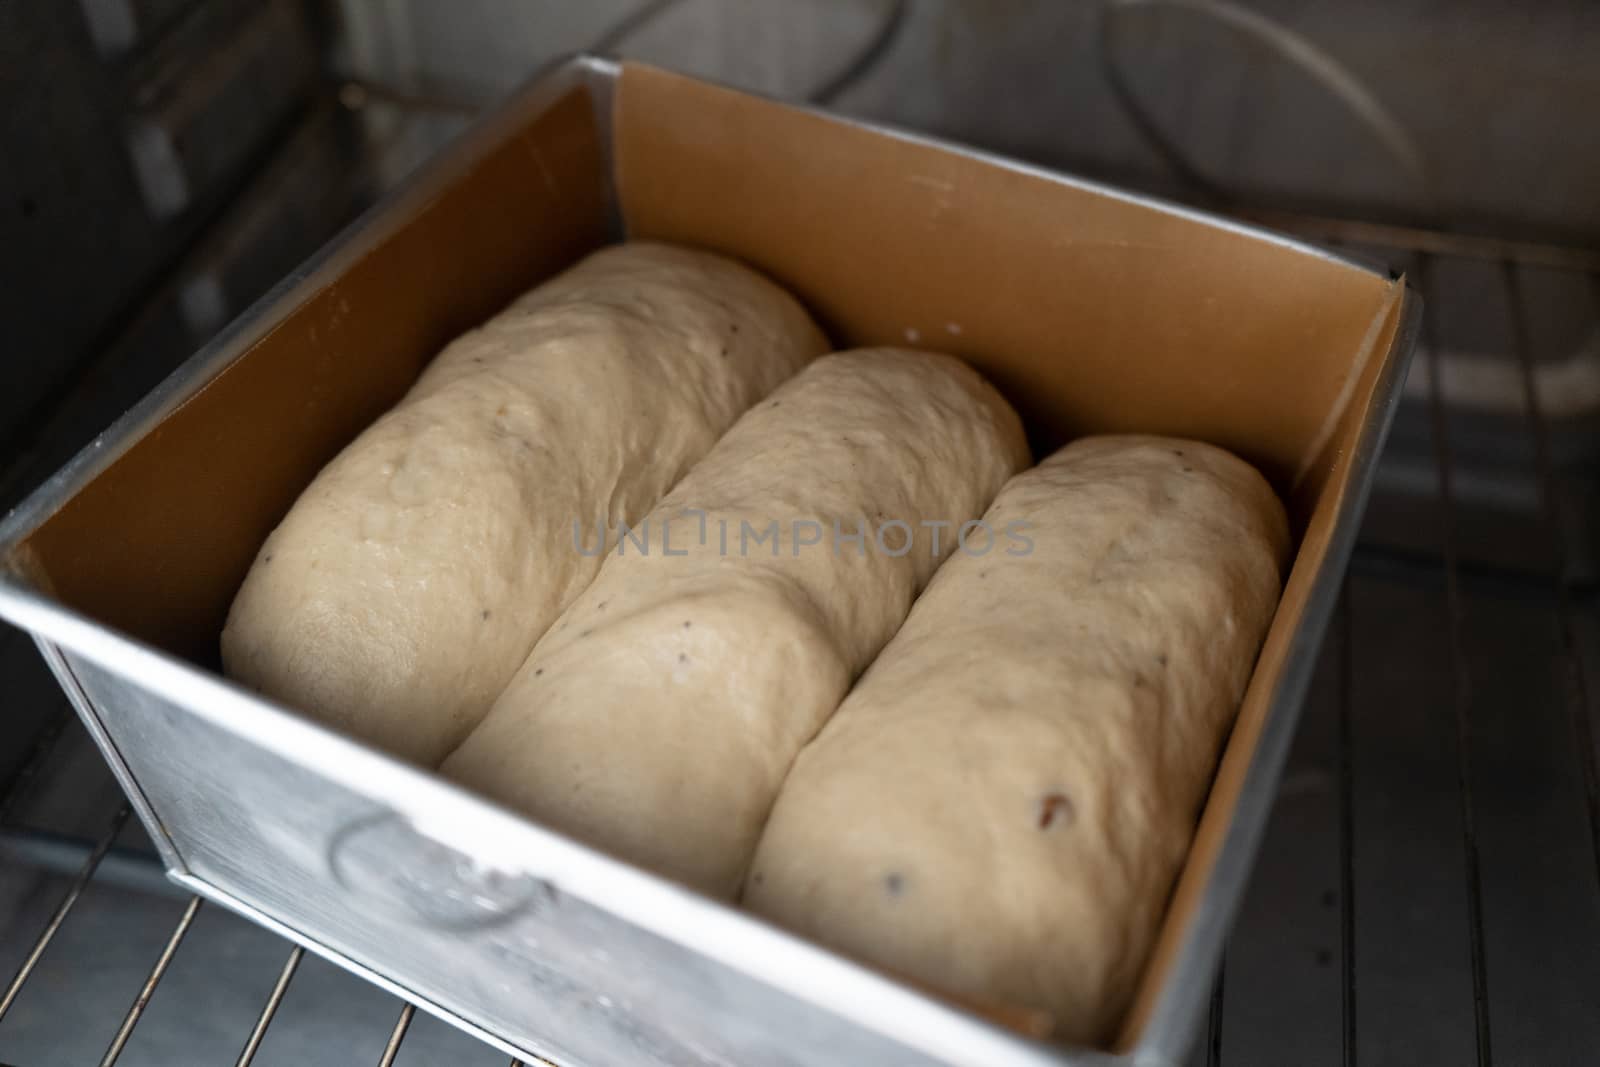 Dough rising inside oven by szefei